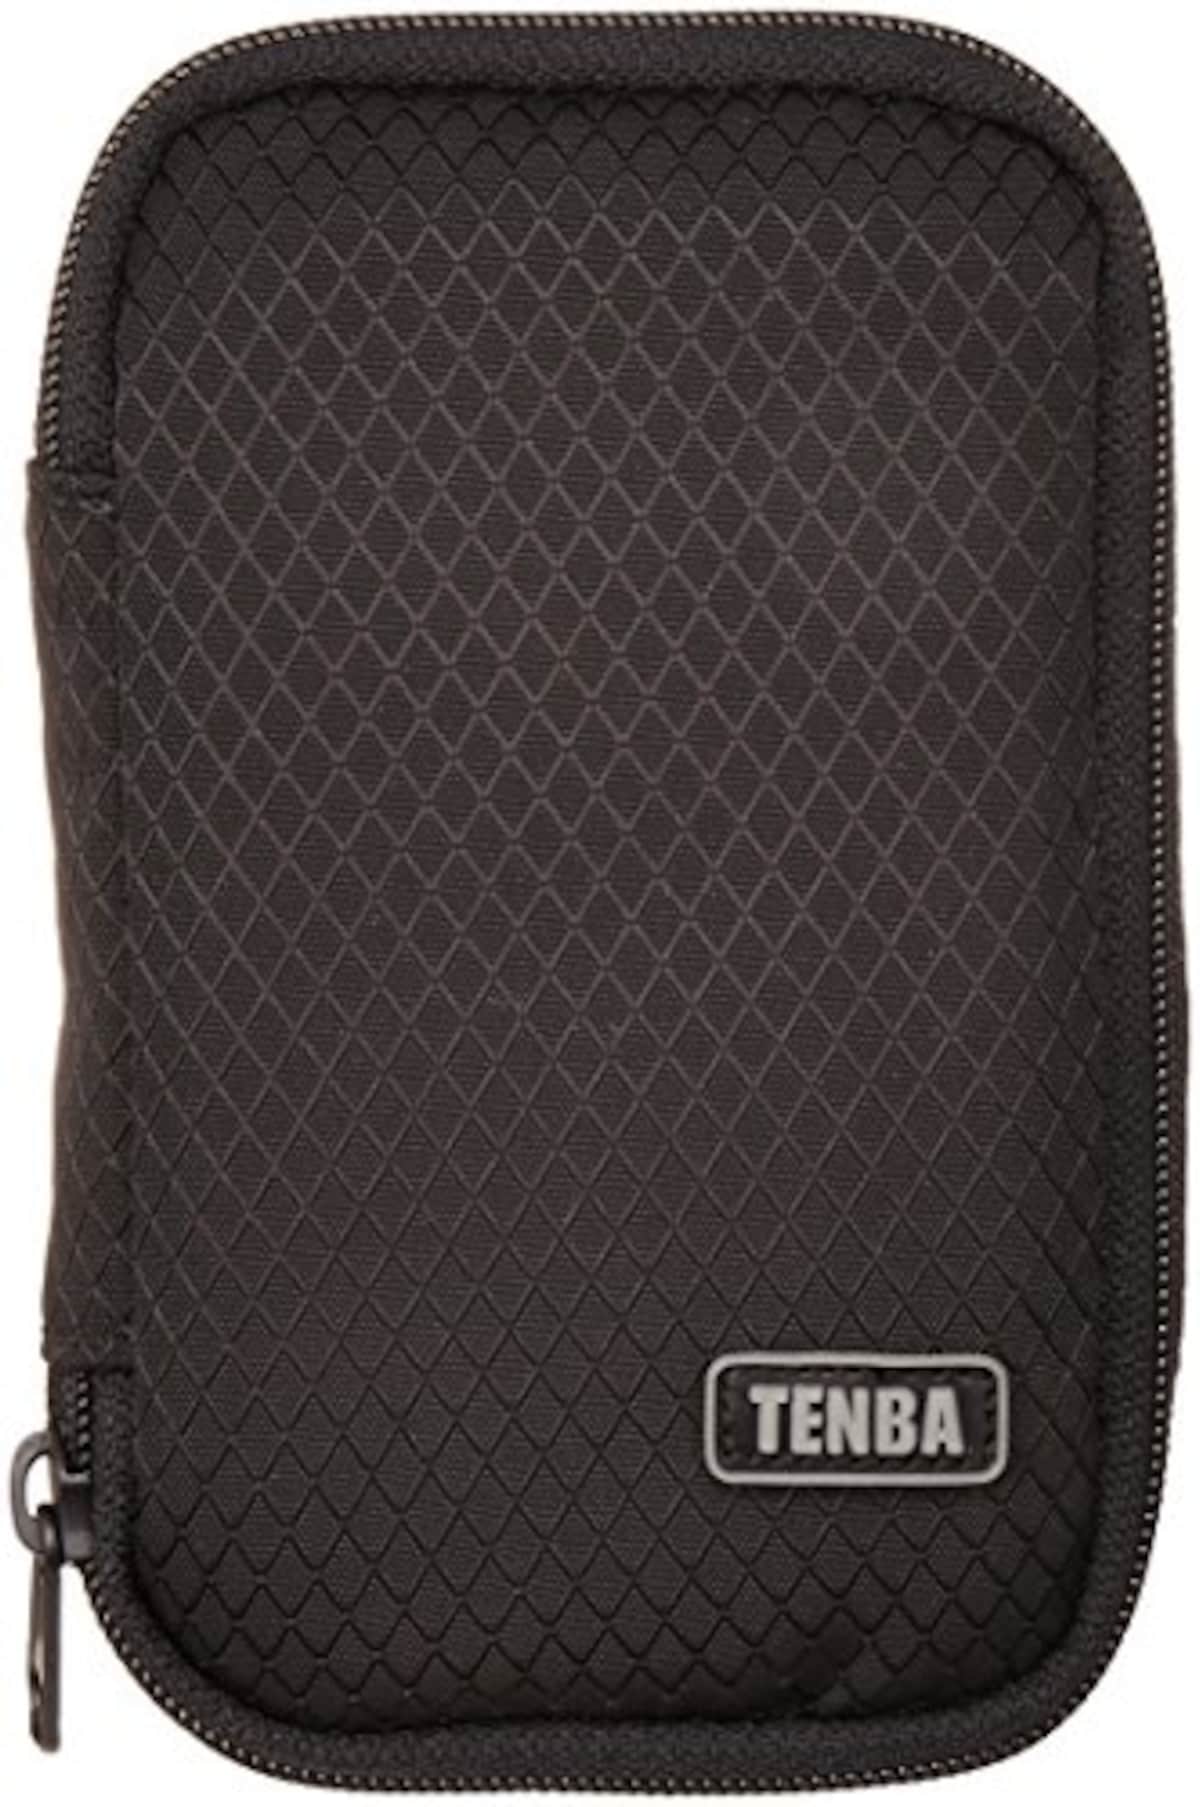 TENBA SHOOTOUT ハードドライブポーチ ブラック 632-803